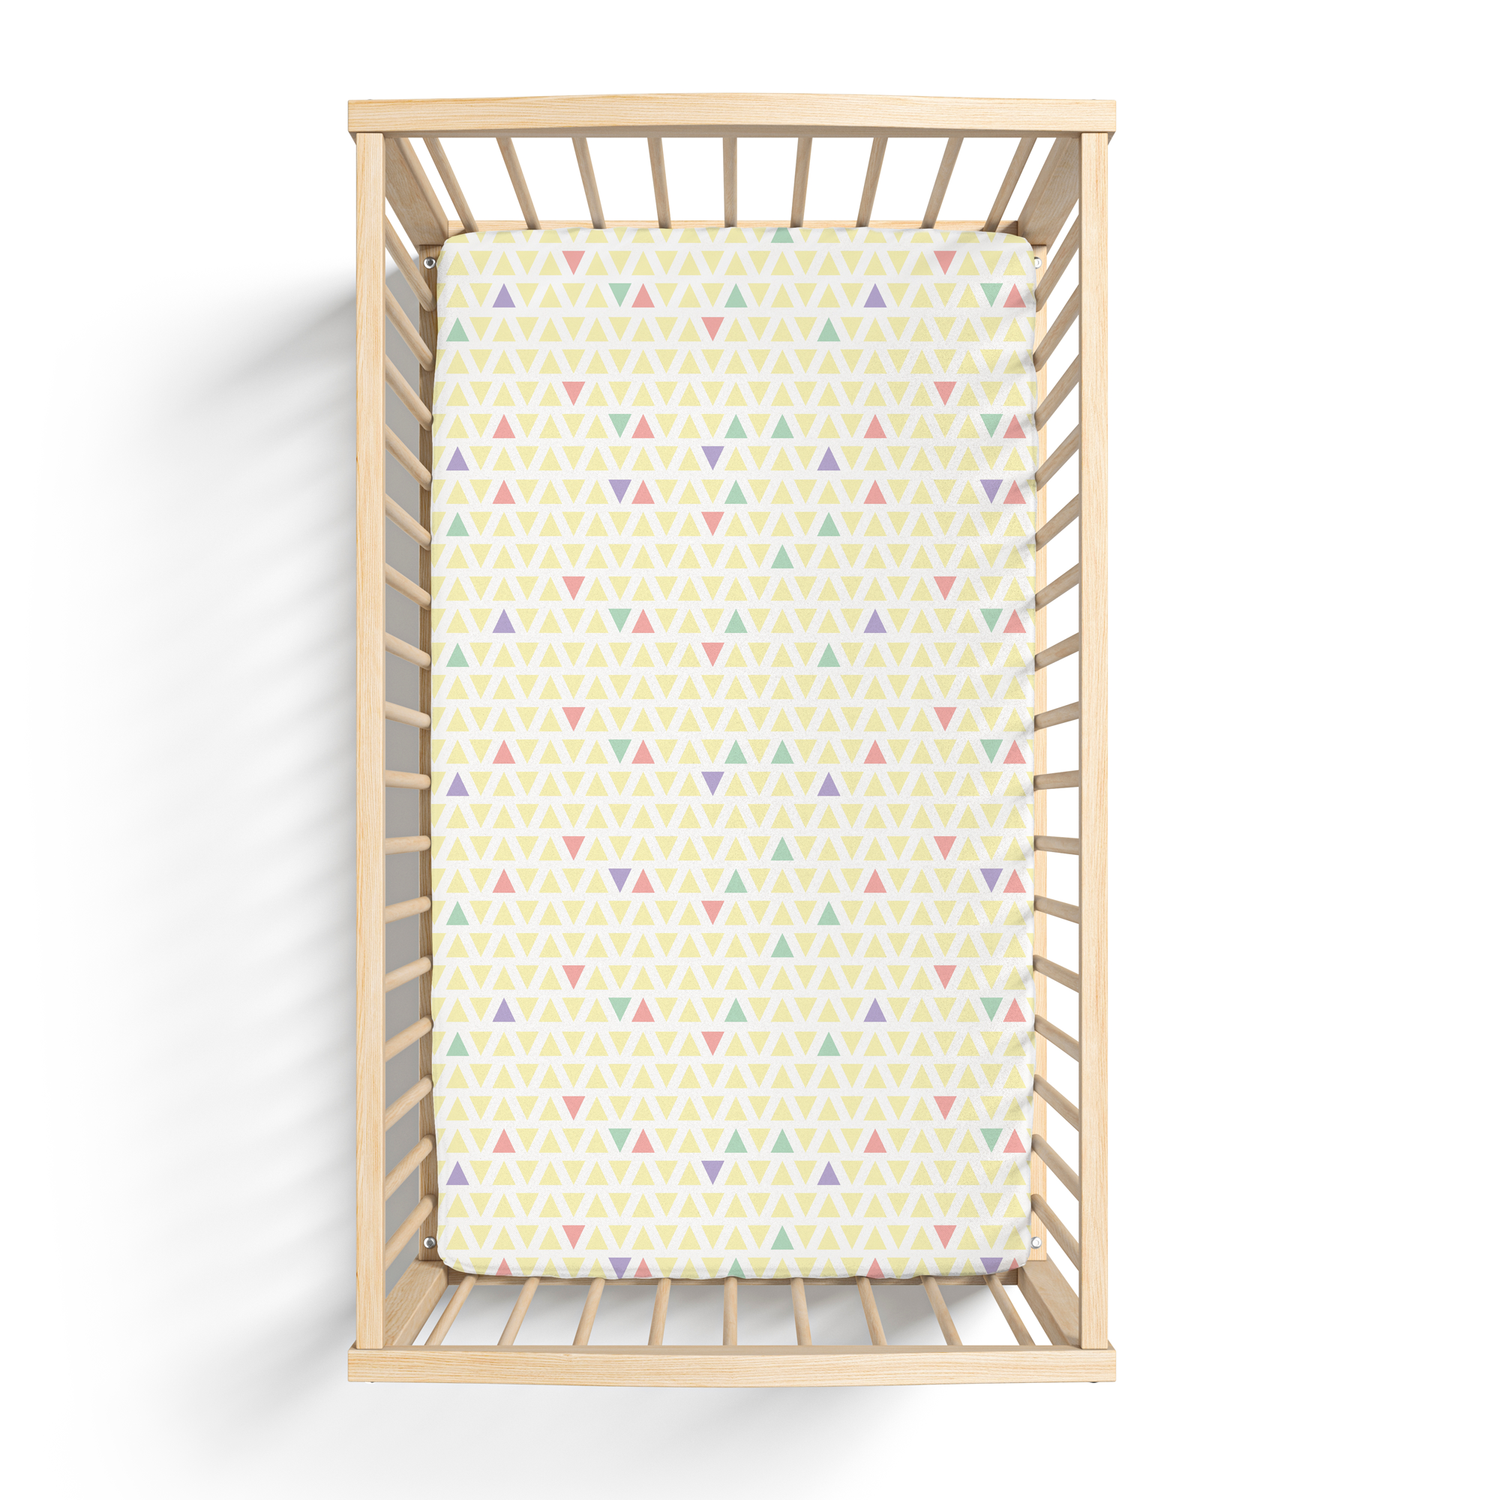 Every Which Way Crib Sheet - Lindsay Ann Artistry